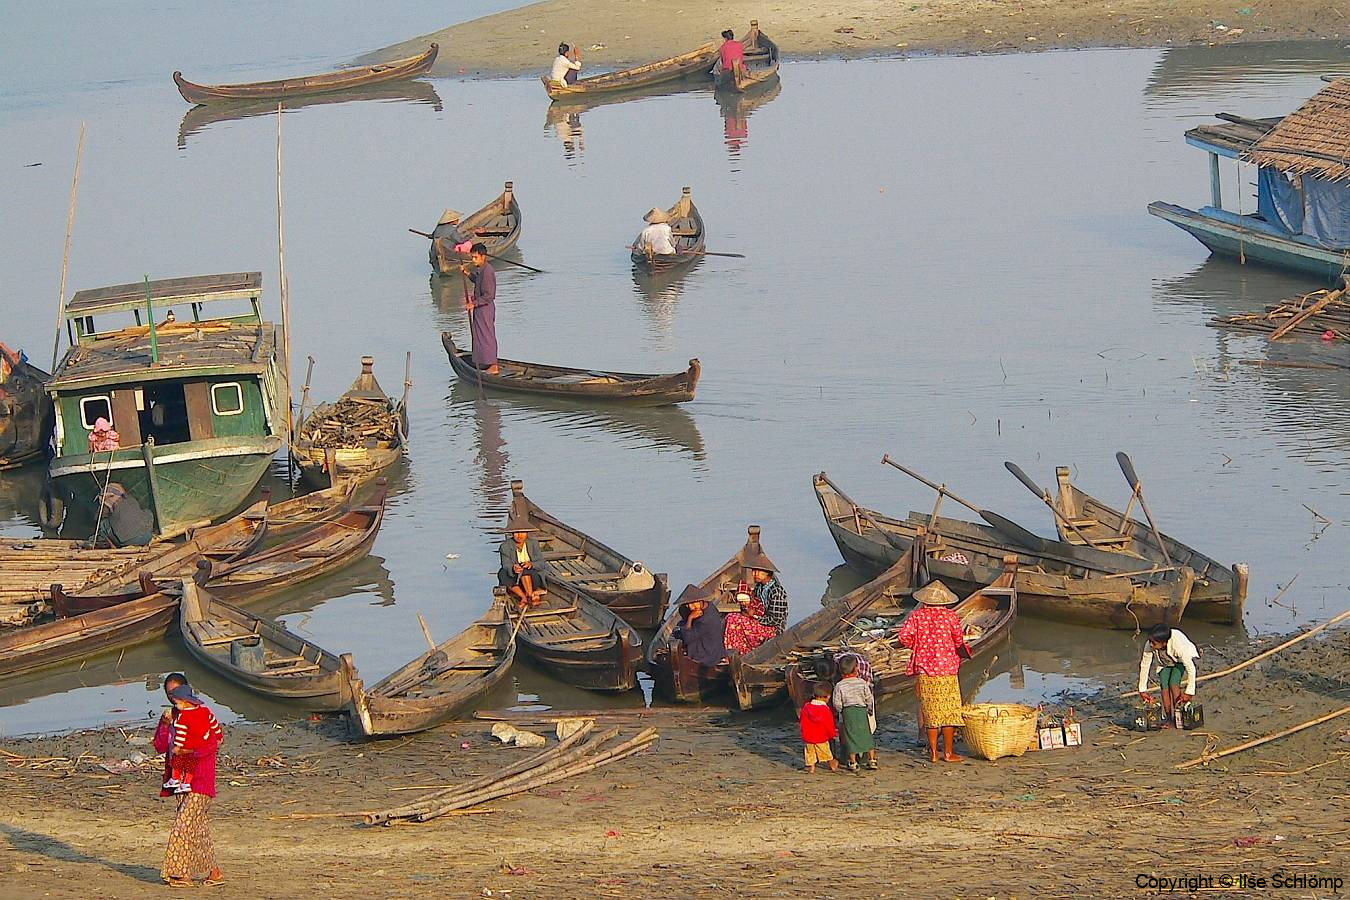 Myanmar, Mingun, Bambusflößer am Irrawaddy